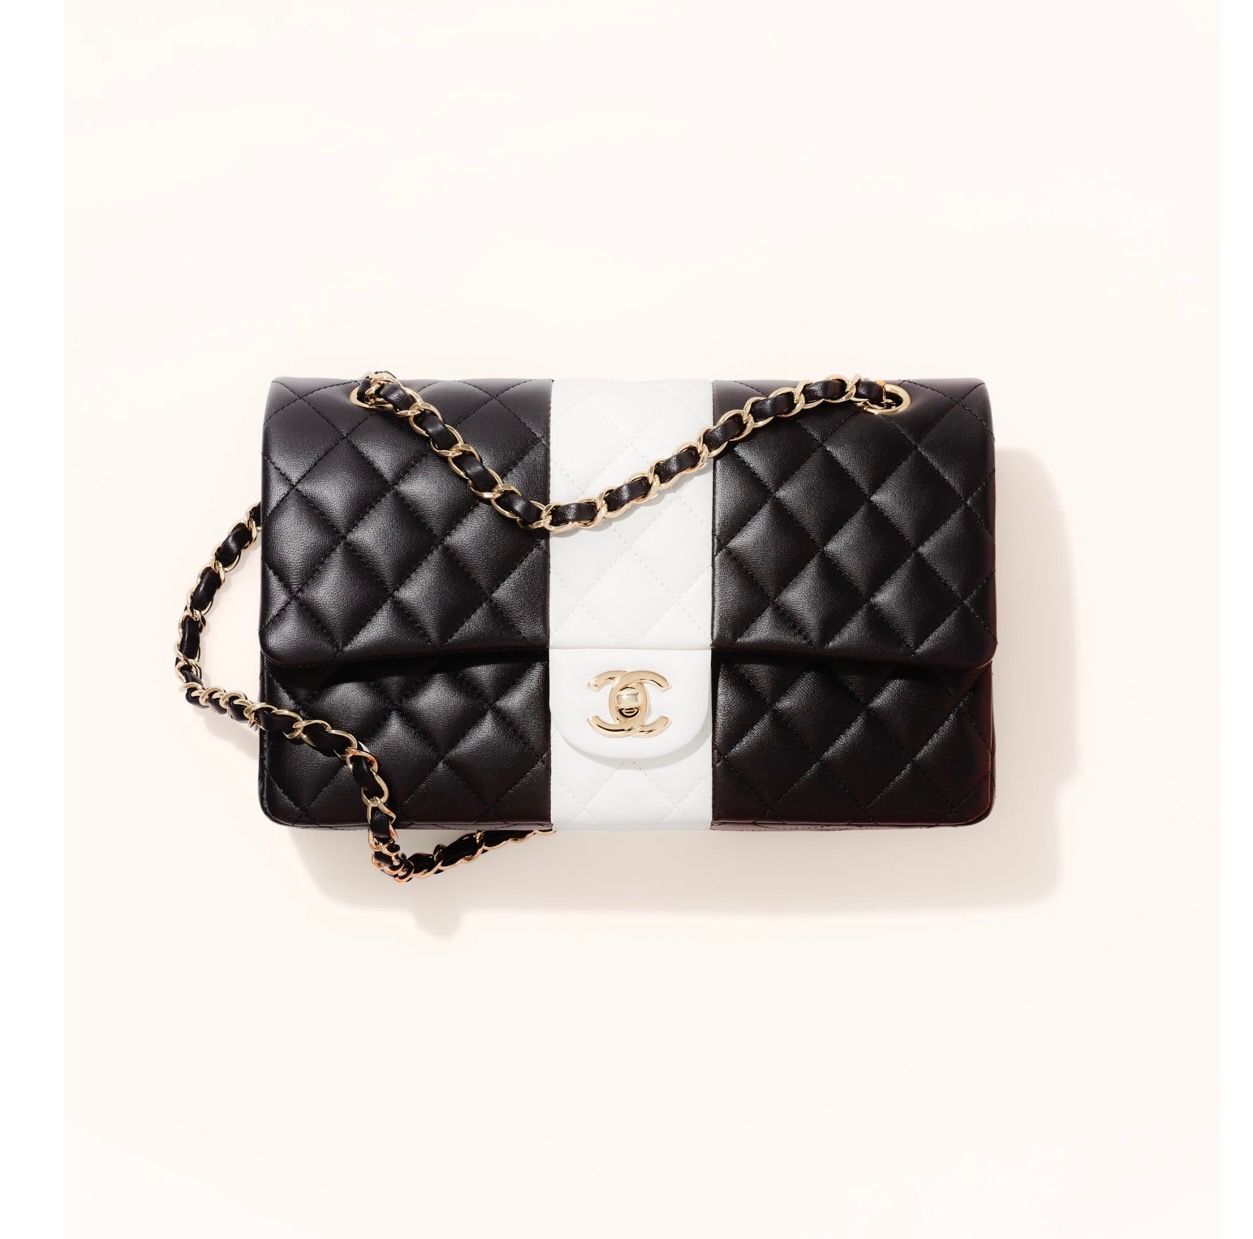 Chanel Classic Flap Shoulder Bag Original Sheepskin leather A01116 Black&White